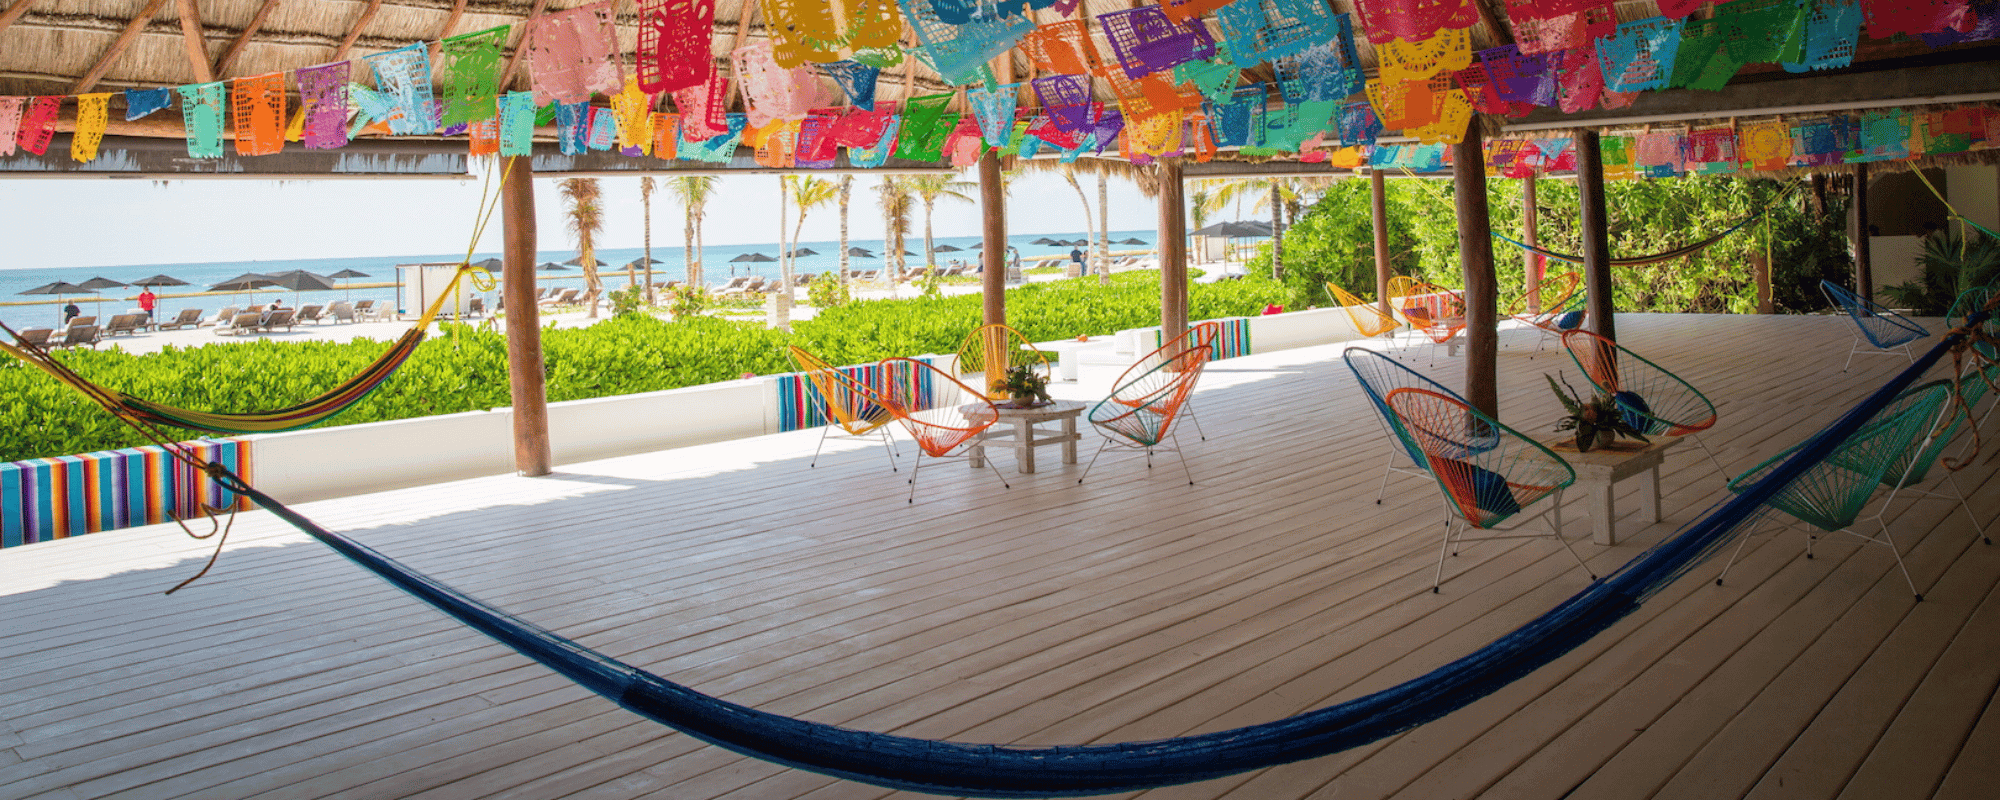 hammock in Mexico incentive travel destination